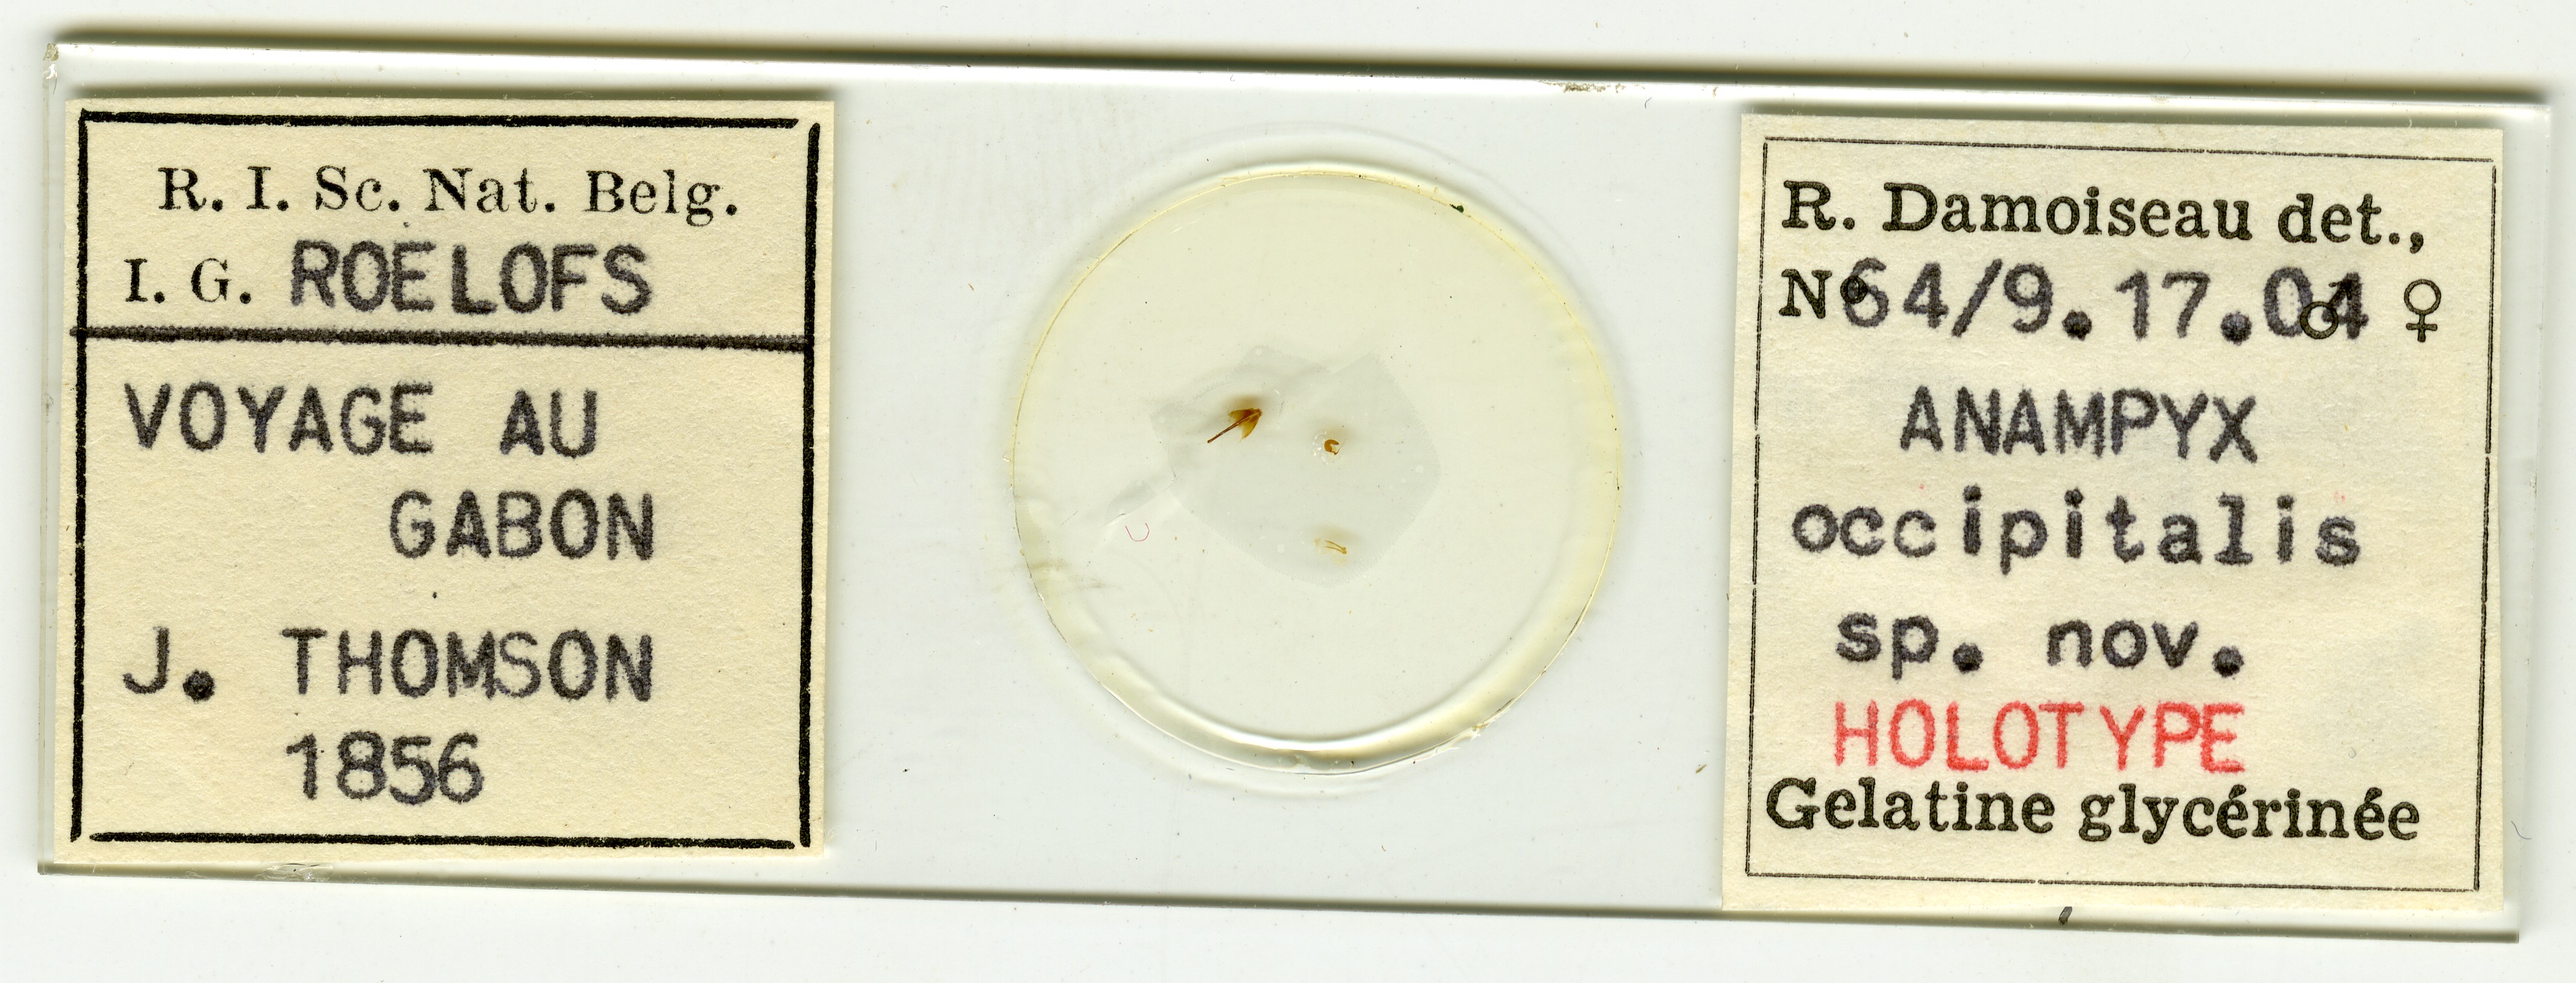 Anampyx occipitalis ht Microscopic preparation.jpg